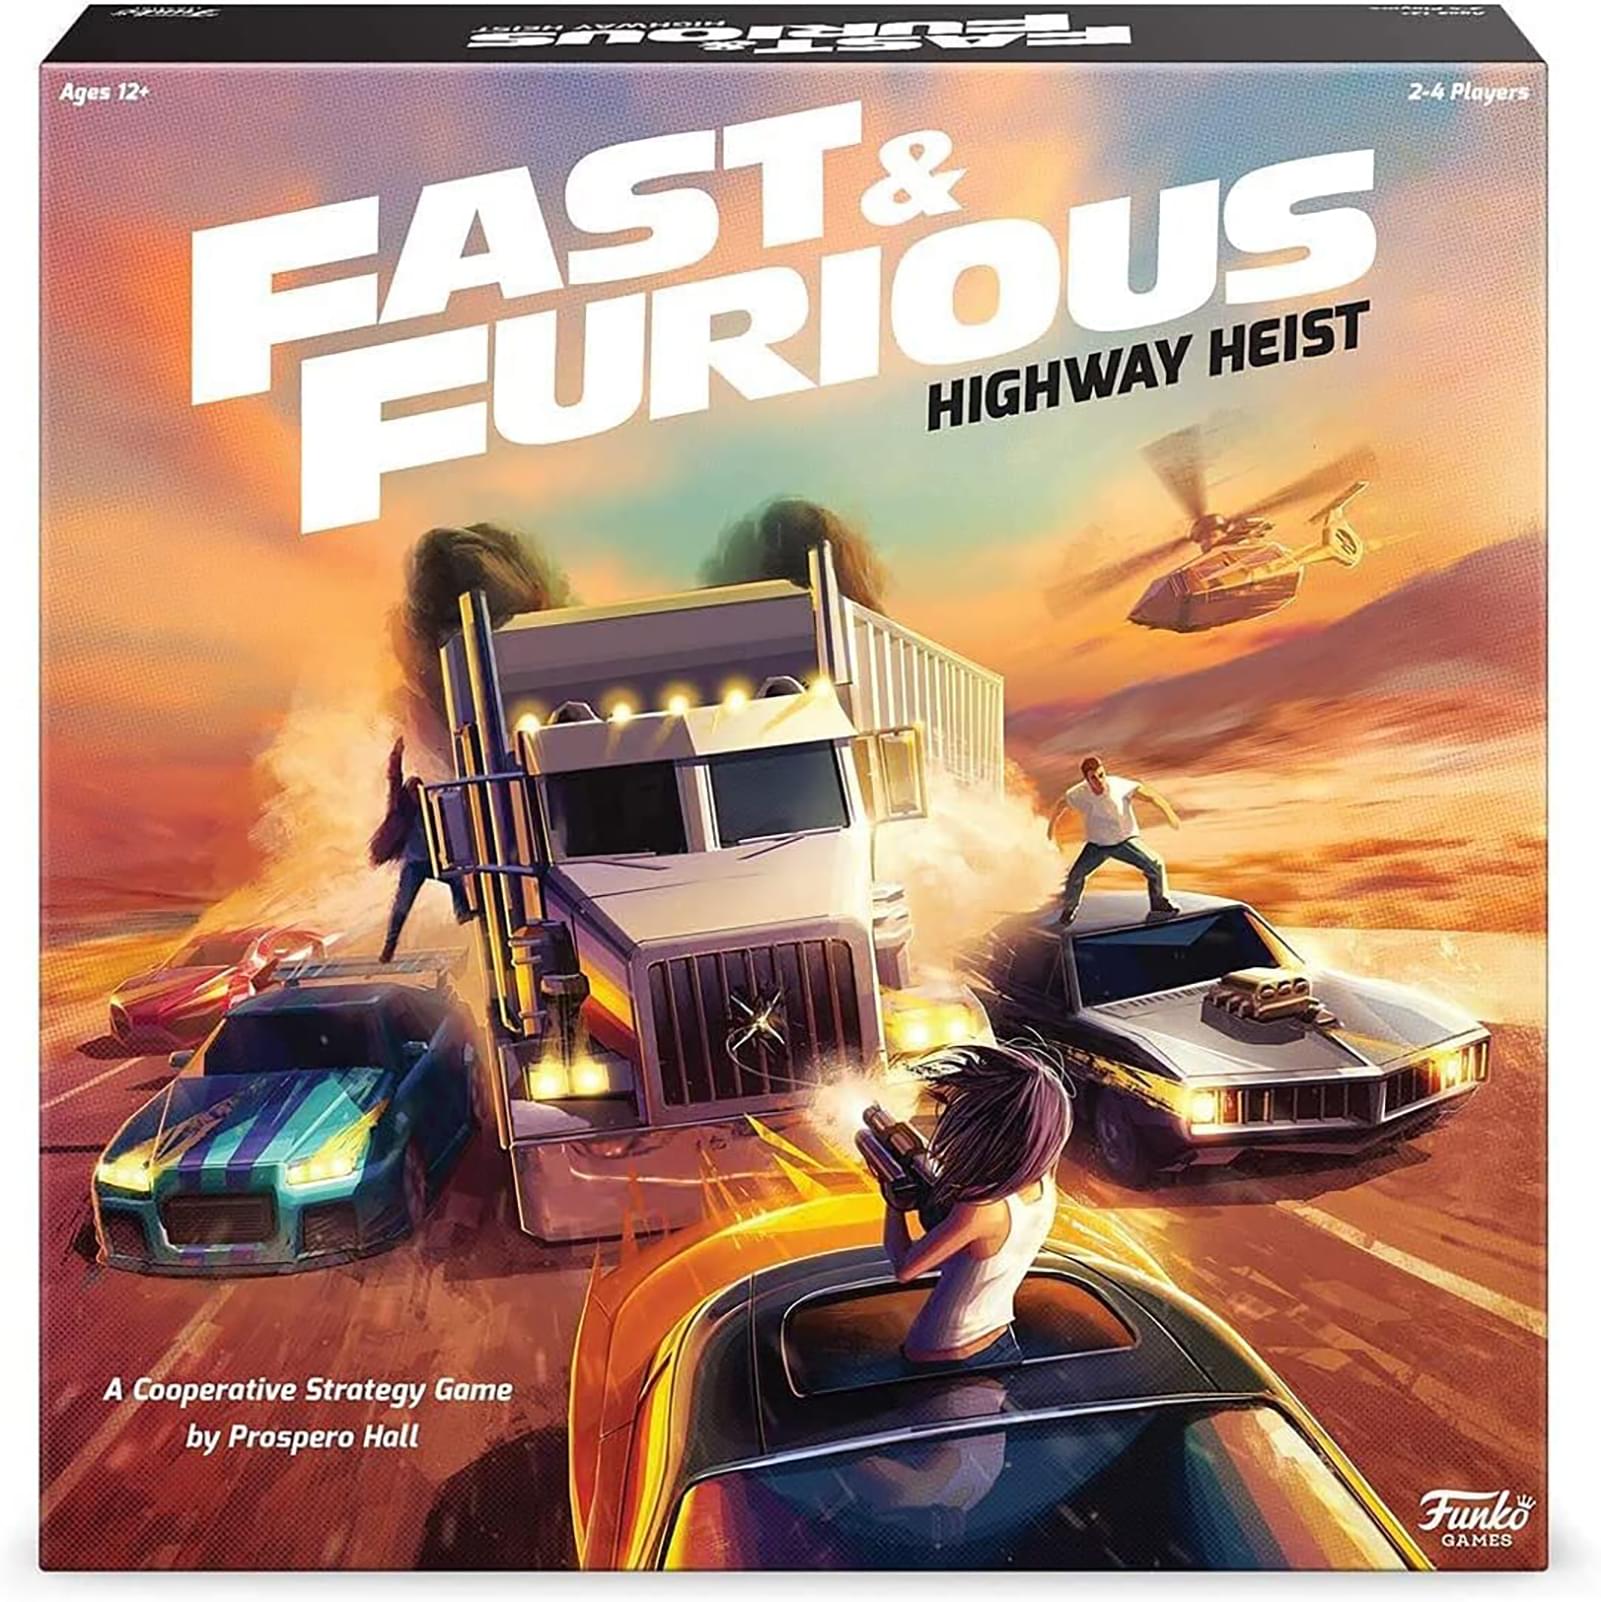 Fast & Furious Highway Heist Funko Game